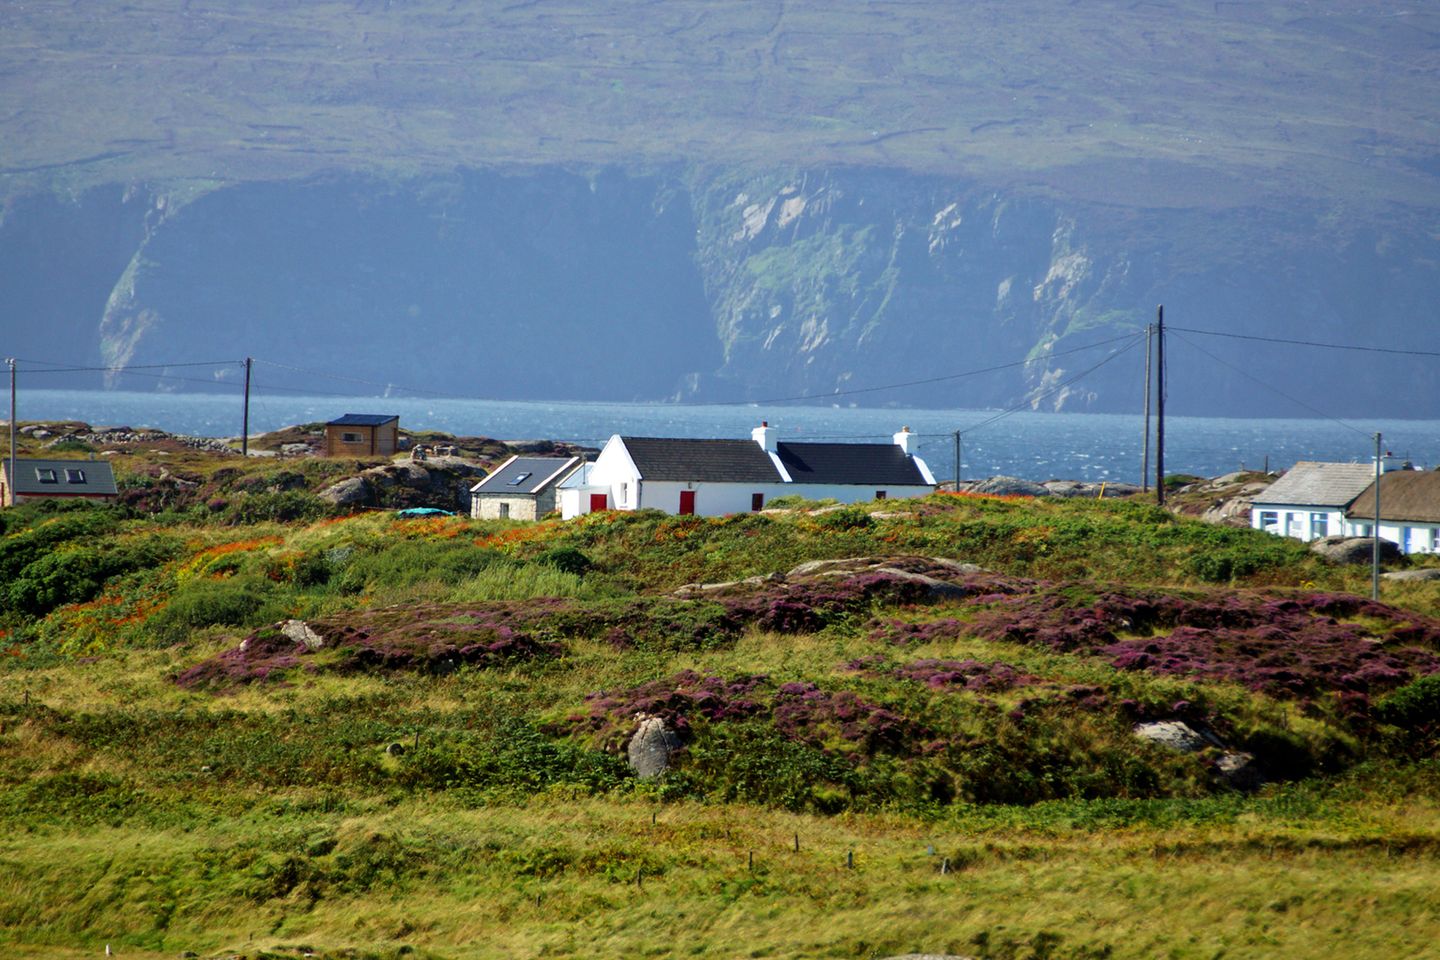 Cruit Island (I296), Kincasslagh, Co. Donegal